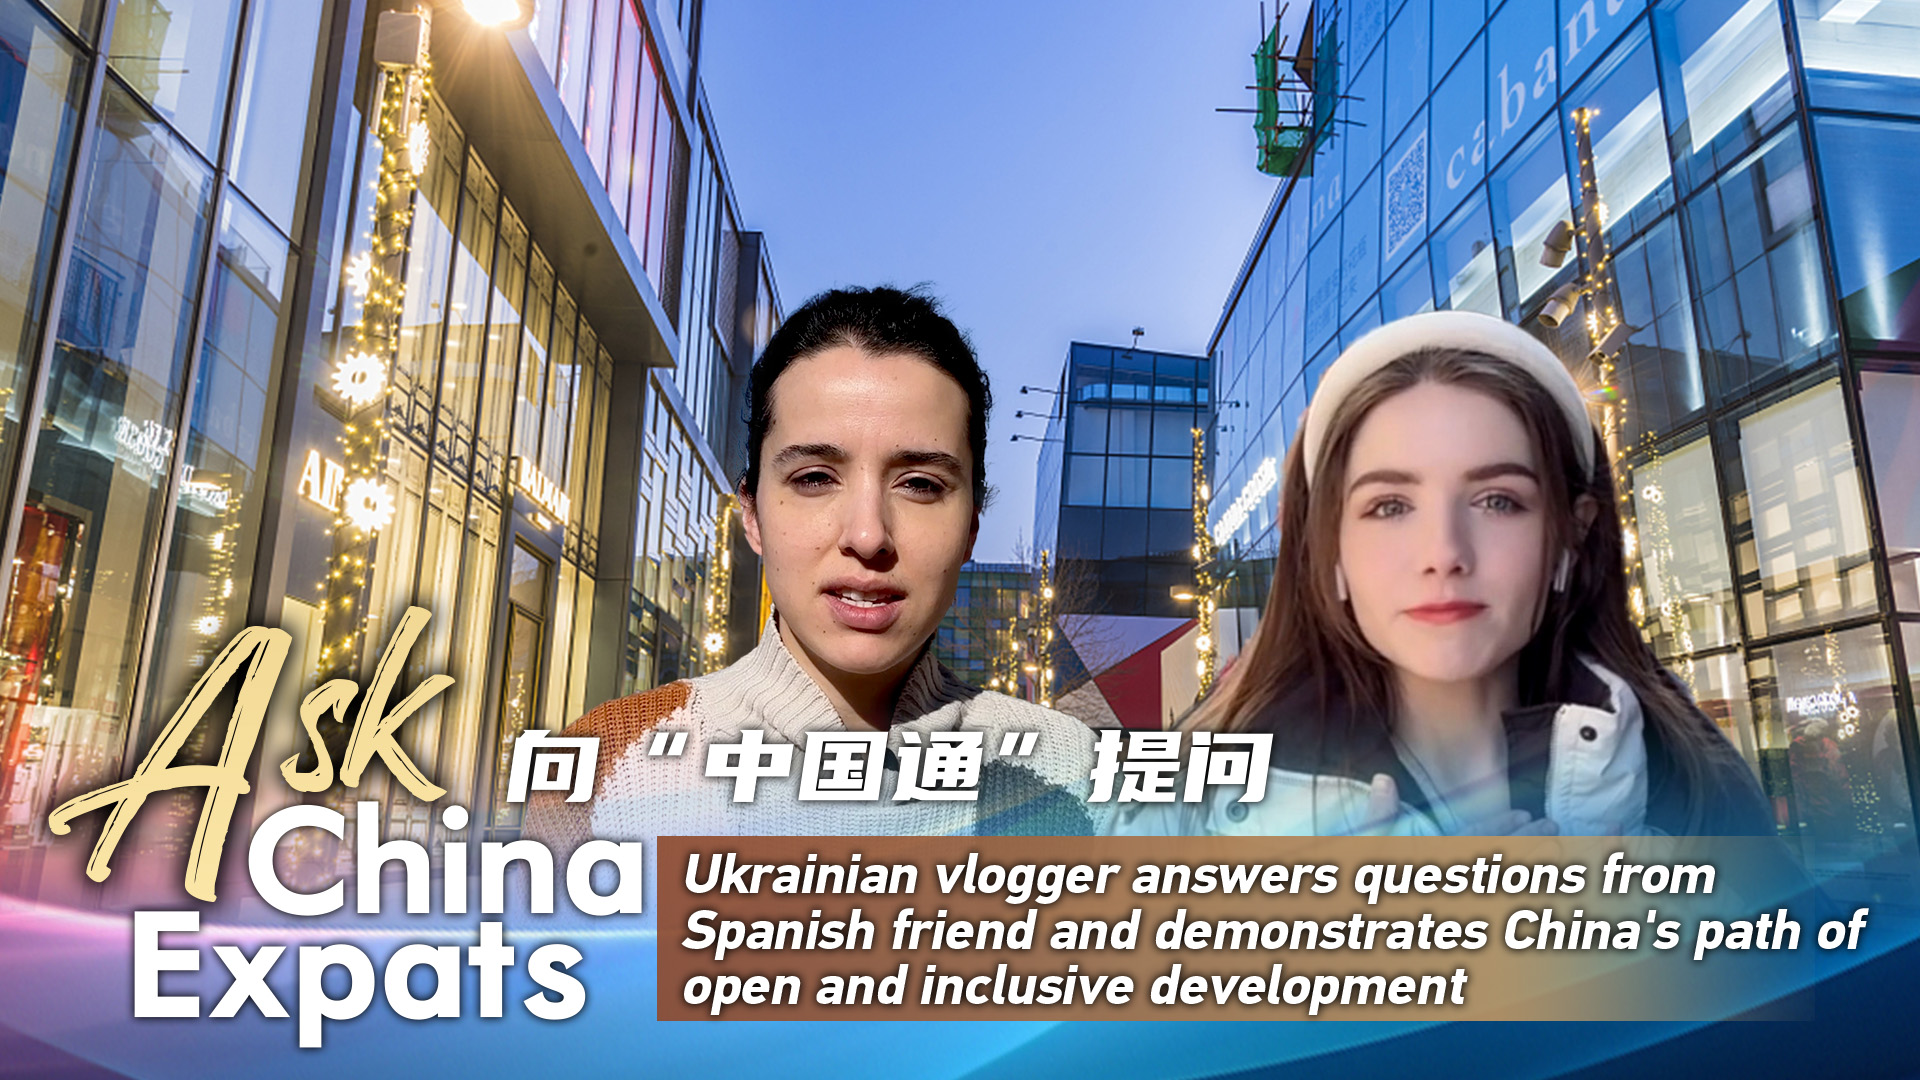 Ukrainian vlogger explains China's open and inclusive development path